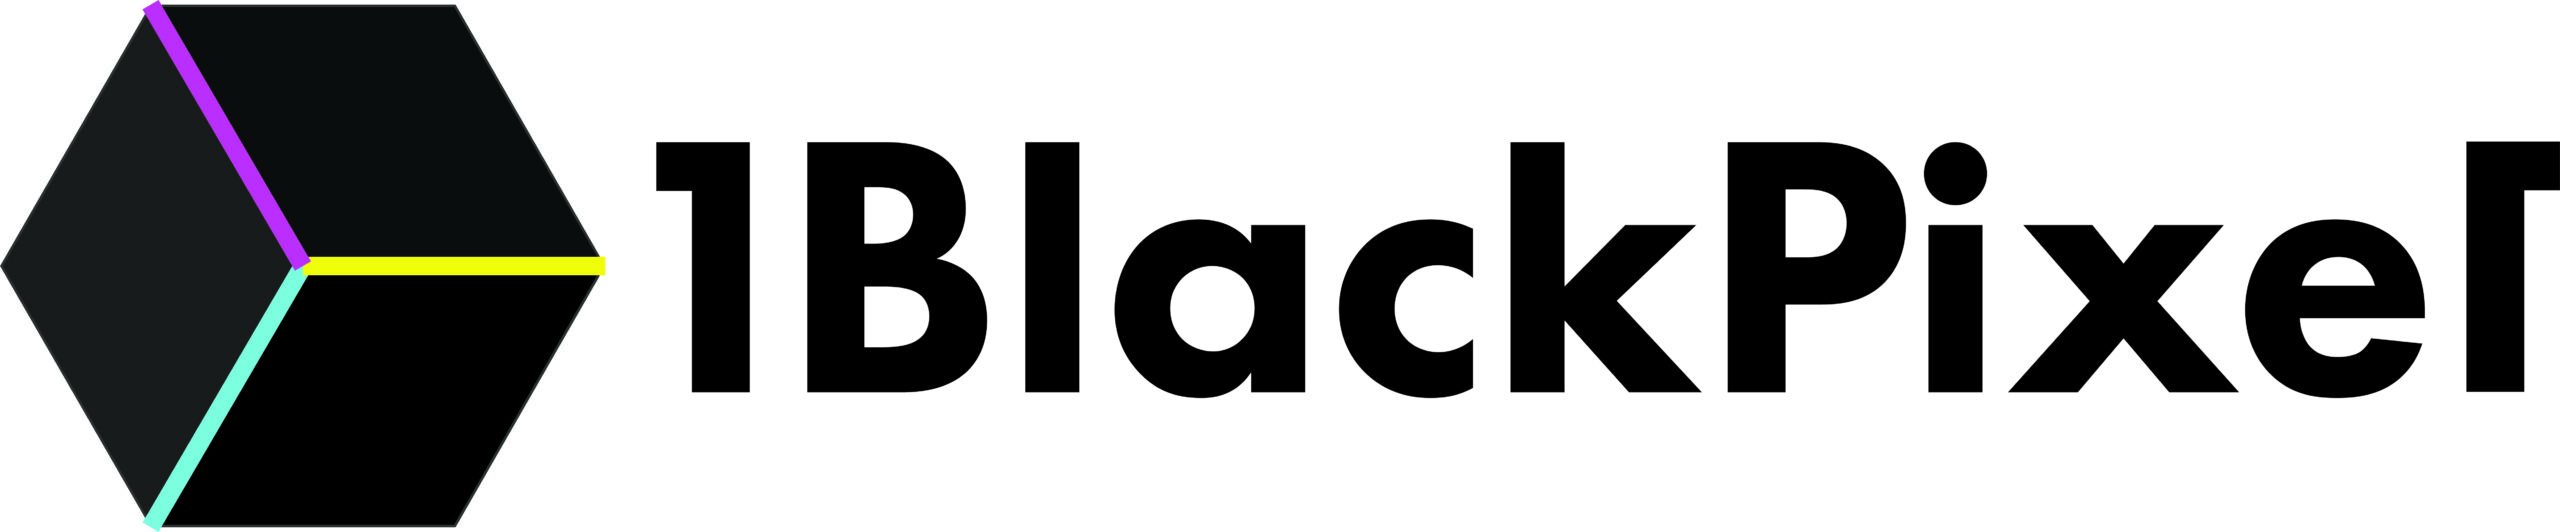 1BlackPixel Logo